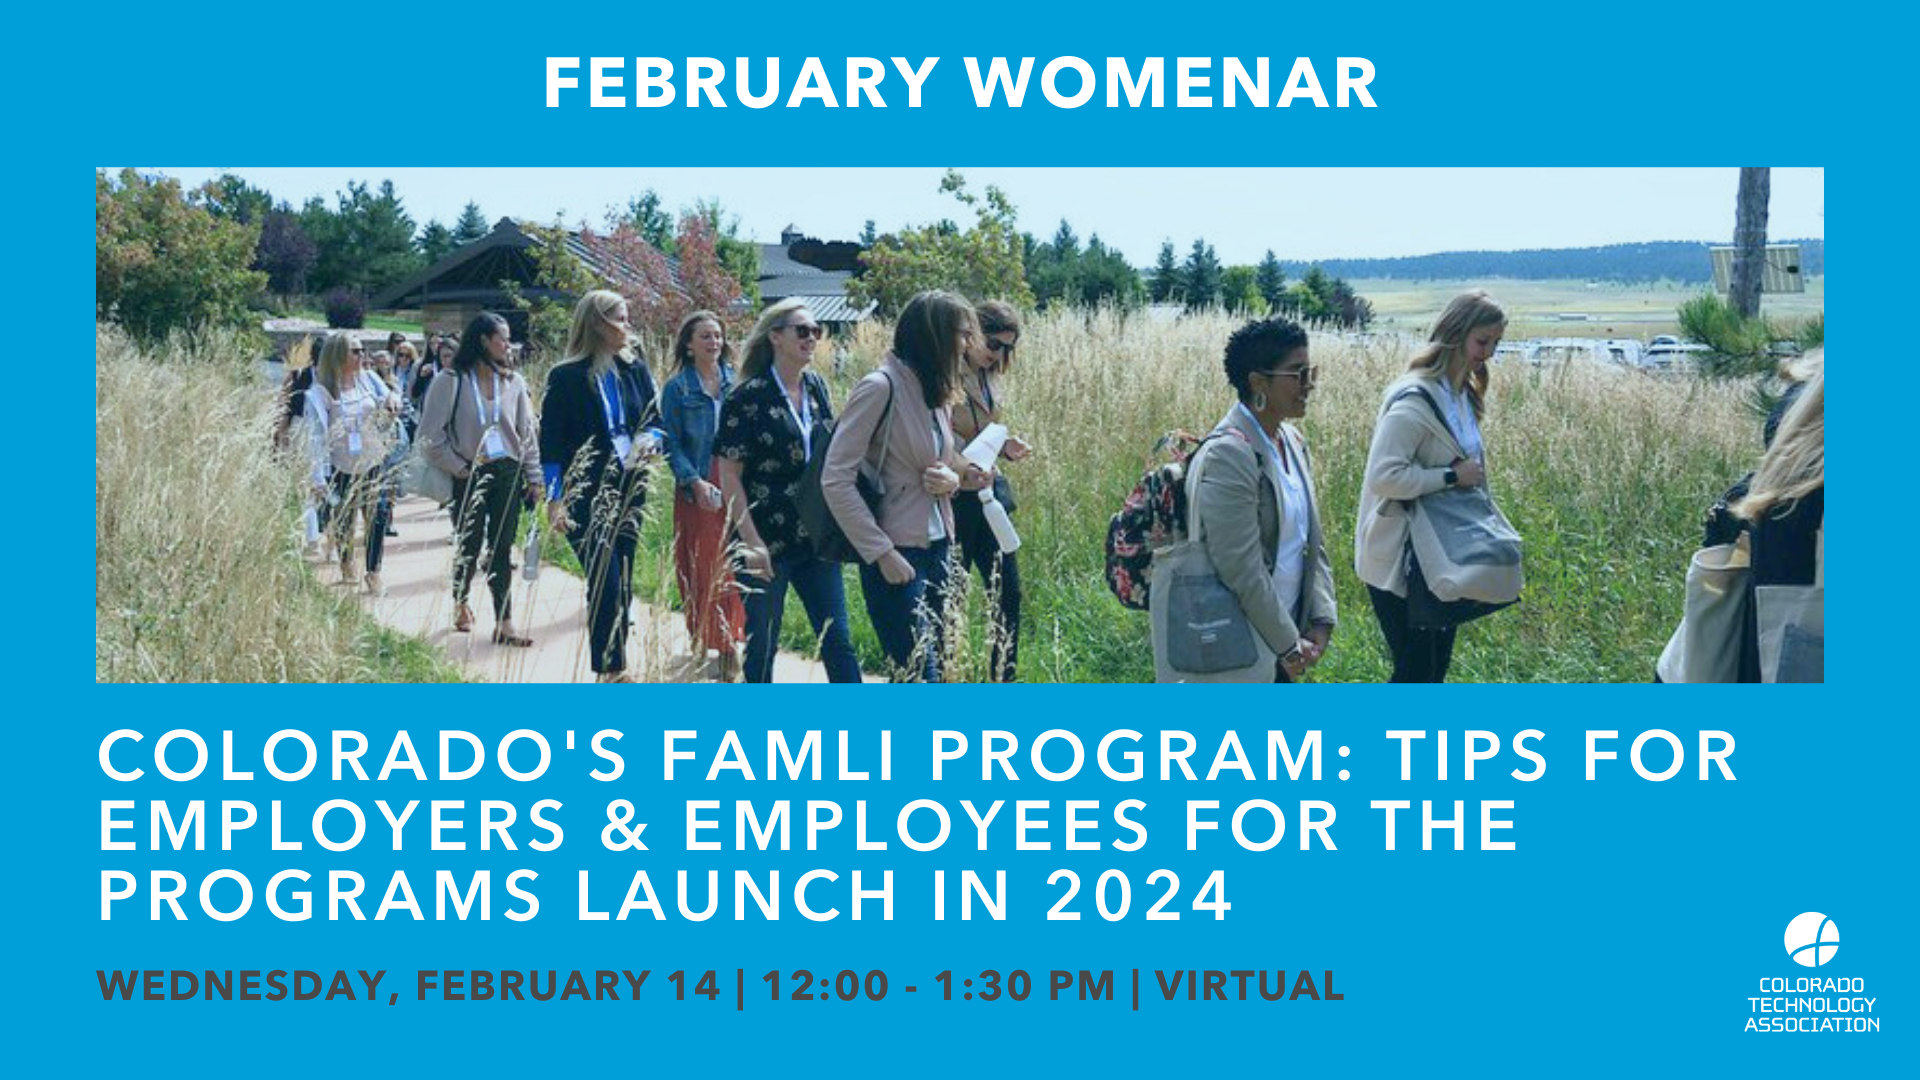 February Womenar Colorado's FAMLI Program Tips for Employers